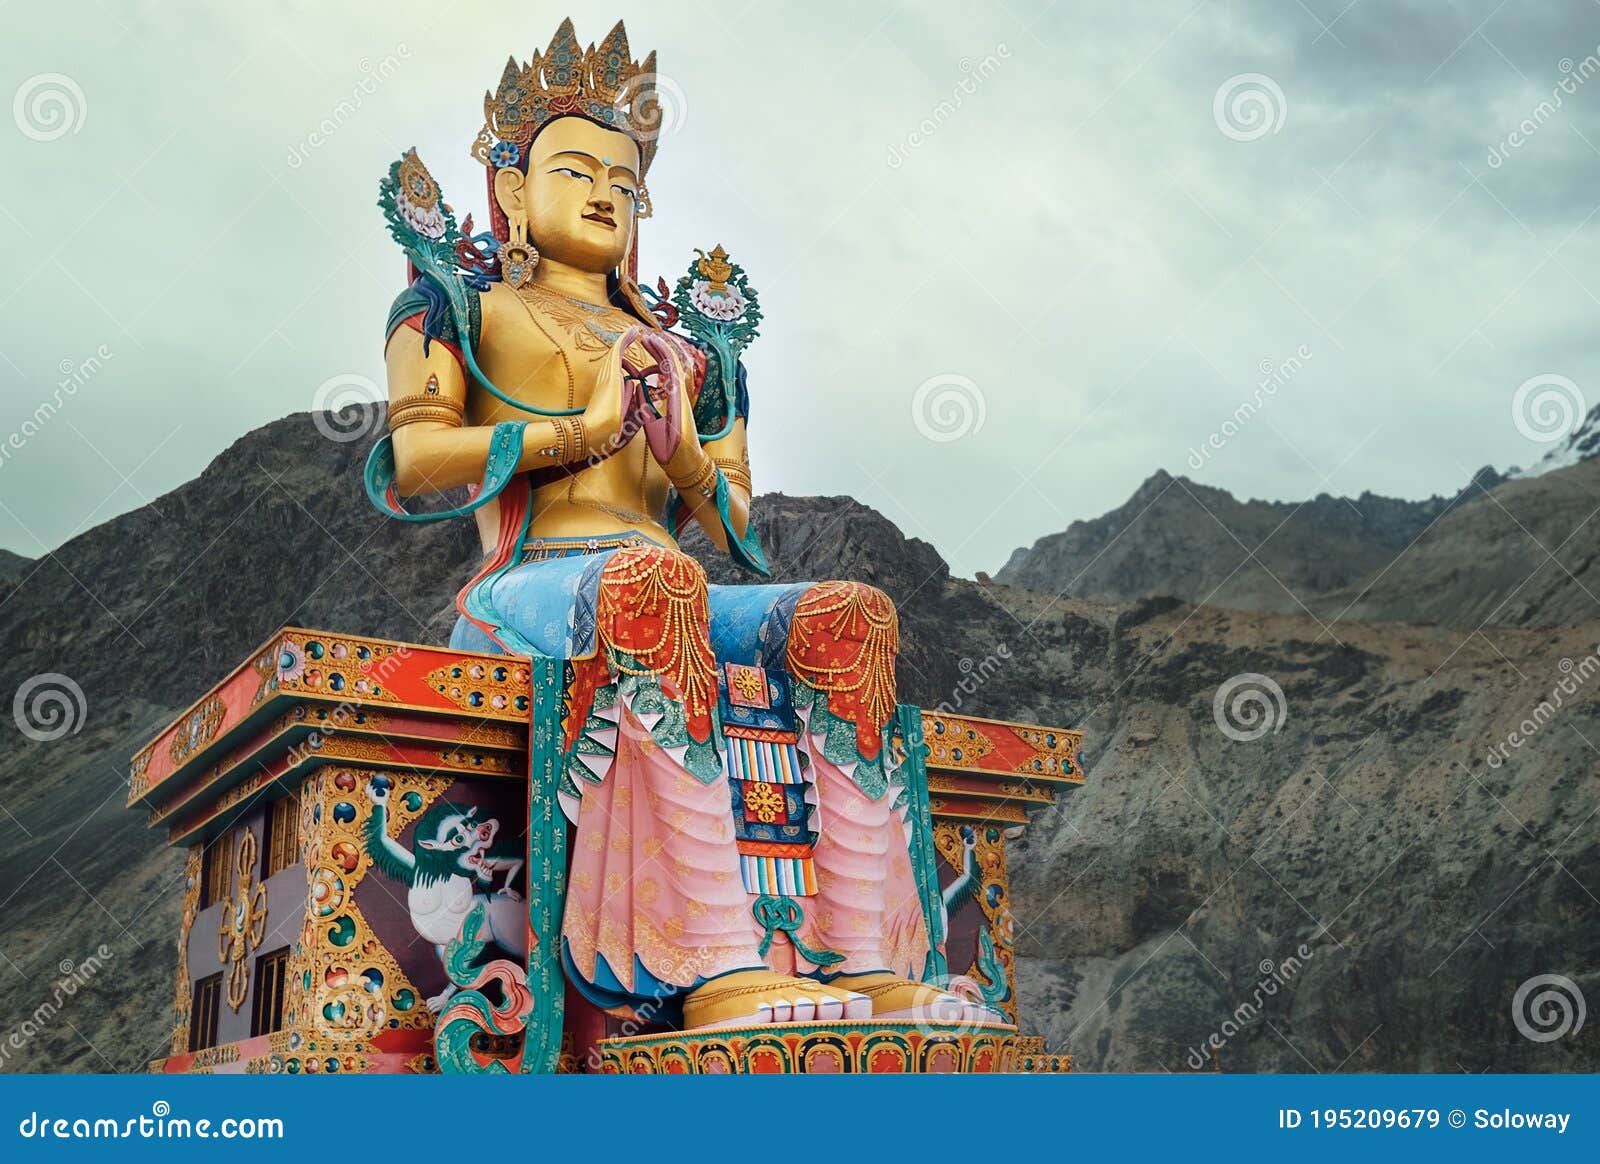 maitreya buddha statue near the diskit gompa diskit monastery in the nubra valley of ladakh, northern india